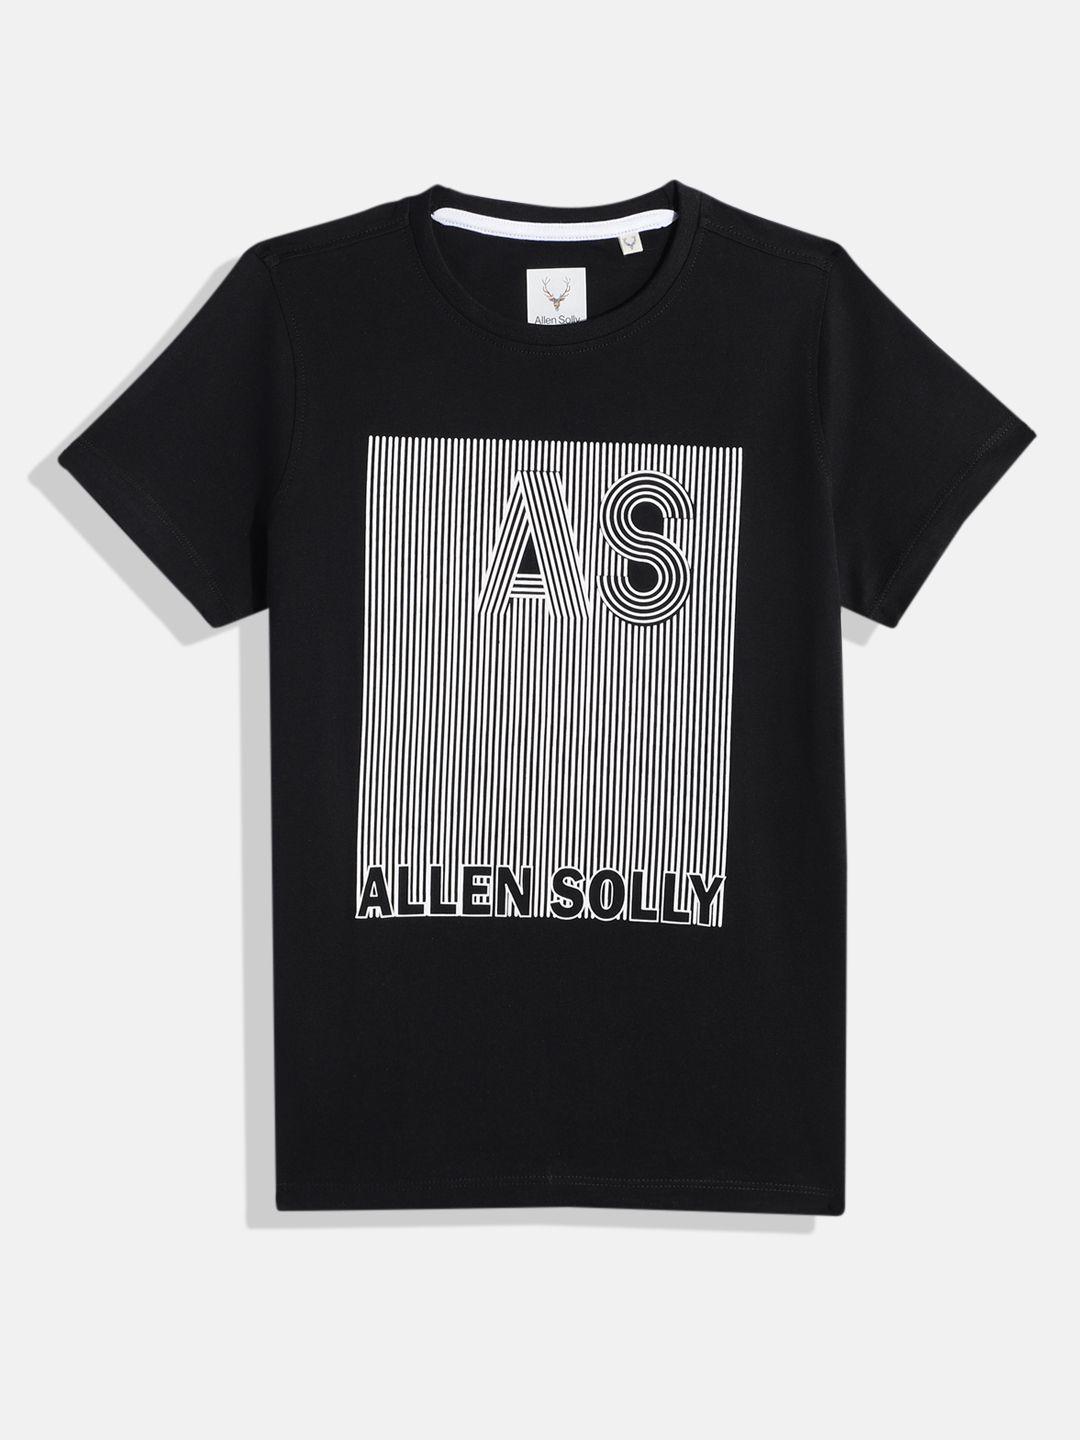 allen solly junior boys brand logo printed pure cotton t-shirt